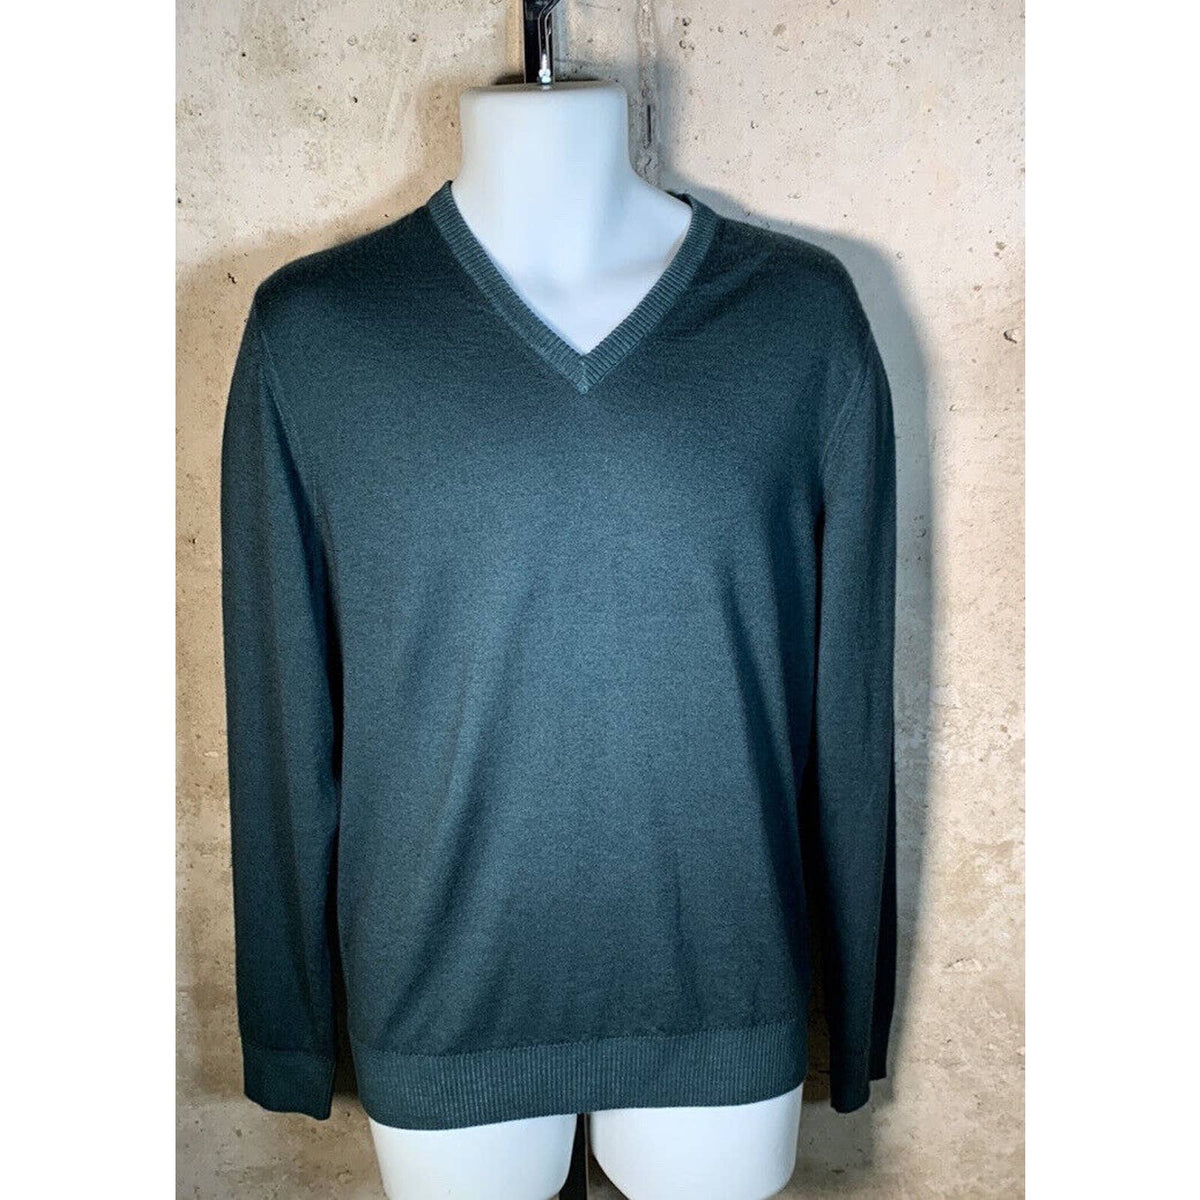 Kiton Green 100% Cashmere Sweater Sz. Large 52